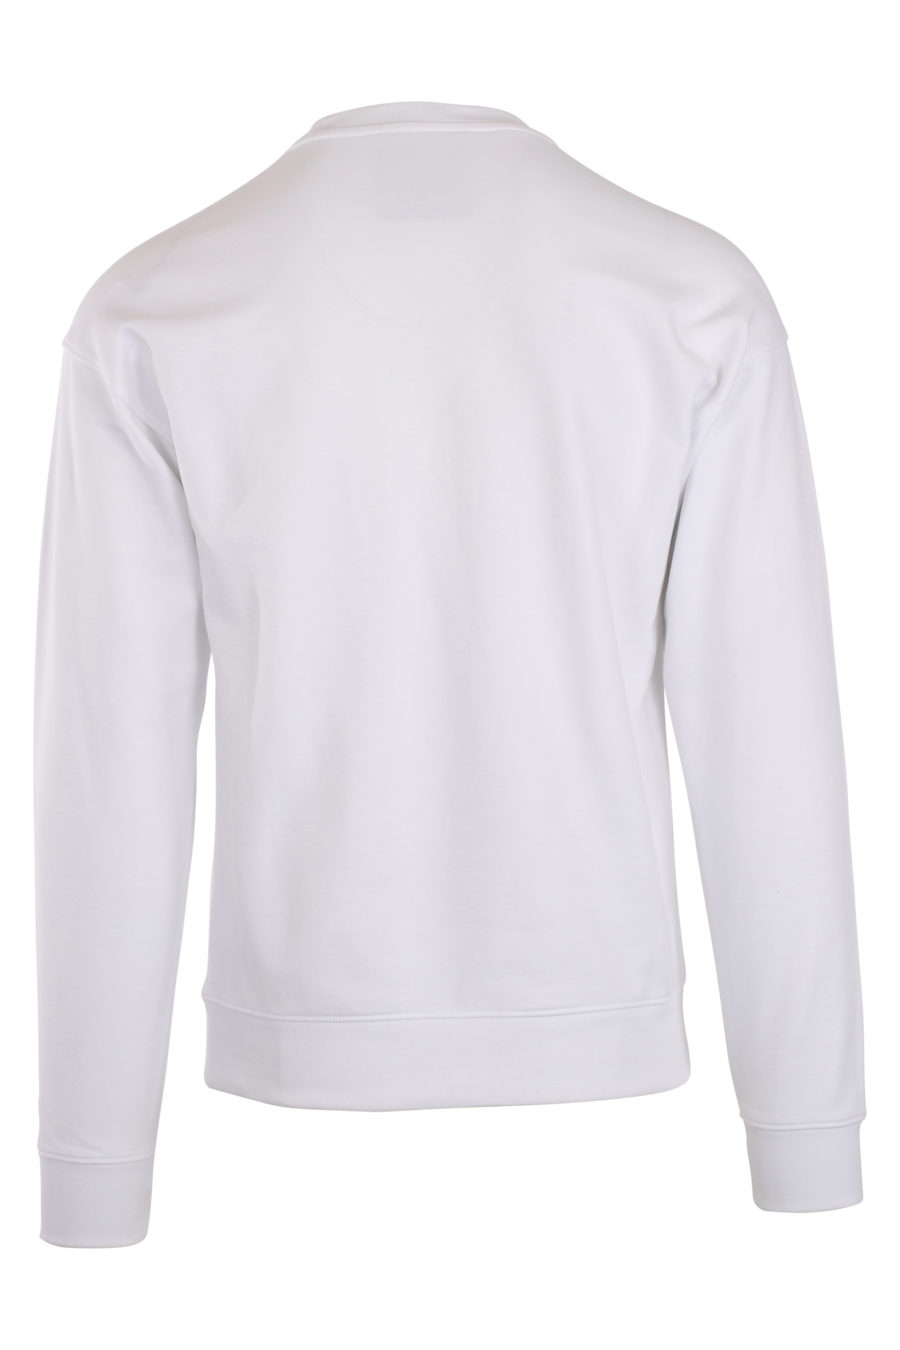 Sweatshirt blanc avec logo milano "fantasy" - IMG 0041